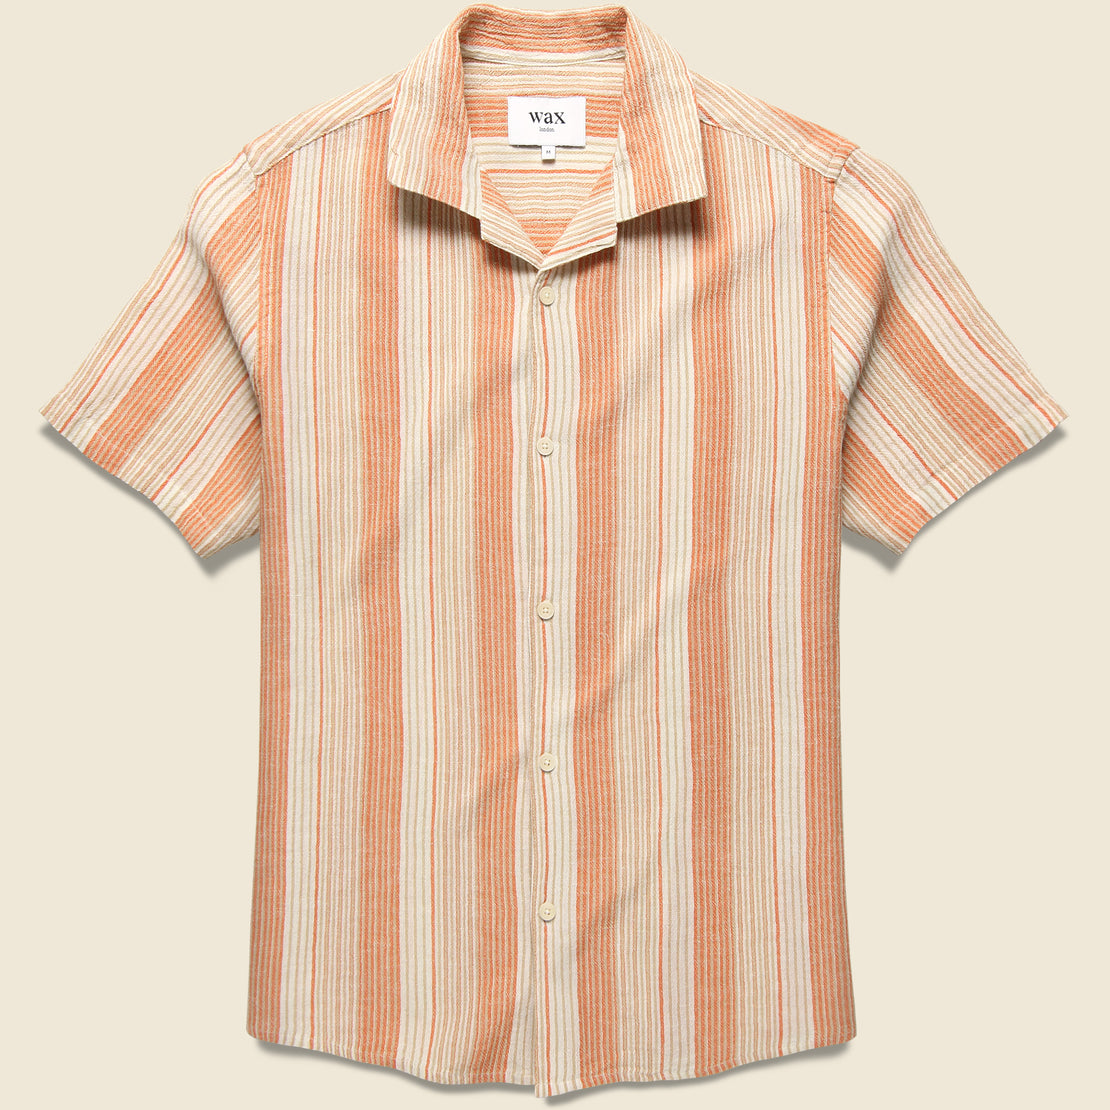 Wax London Crinkle Stripe Shirt - Orange